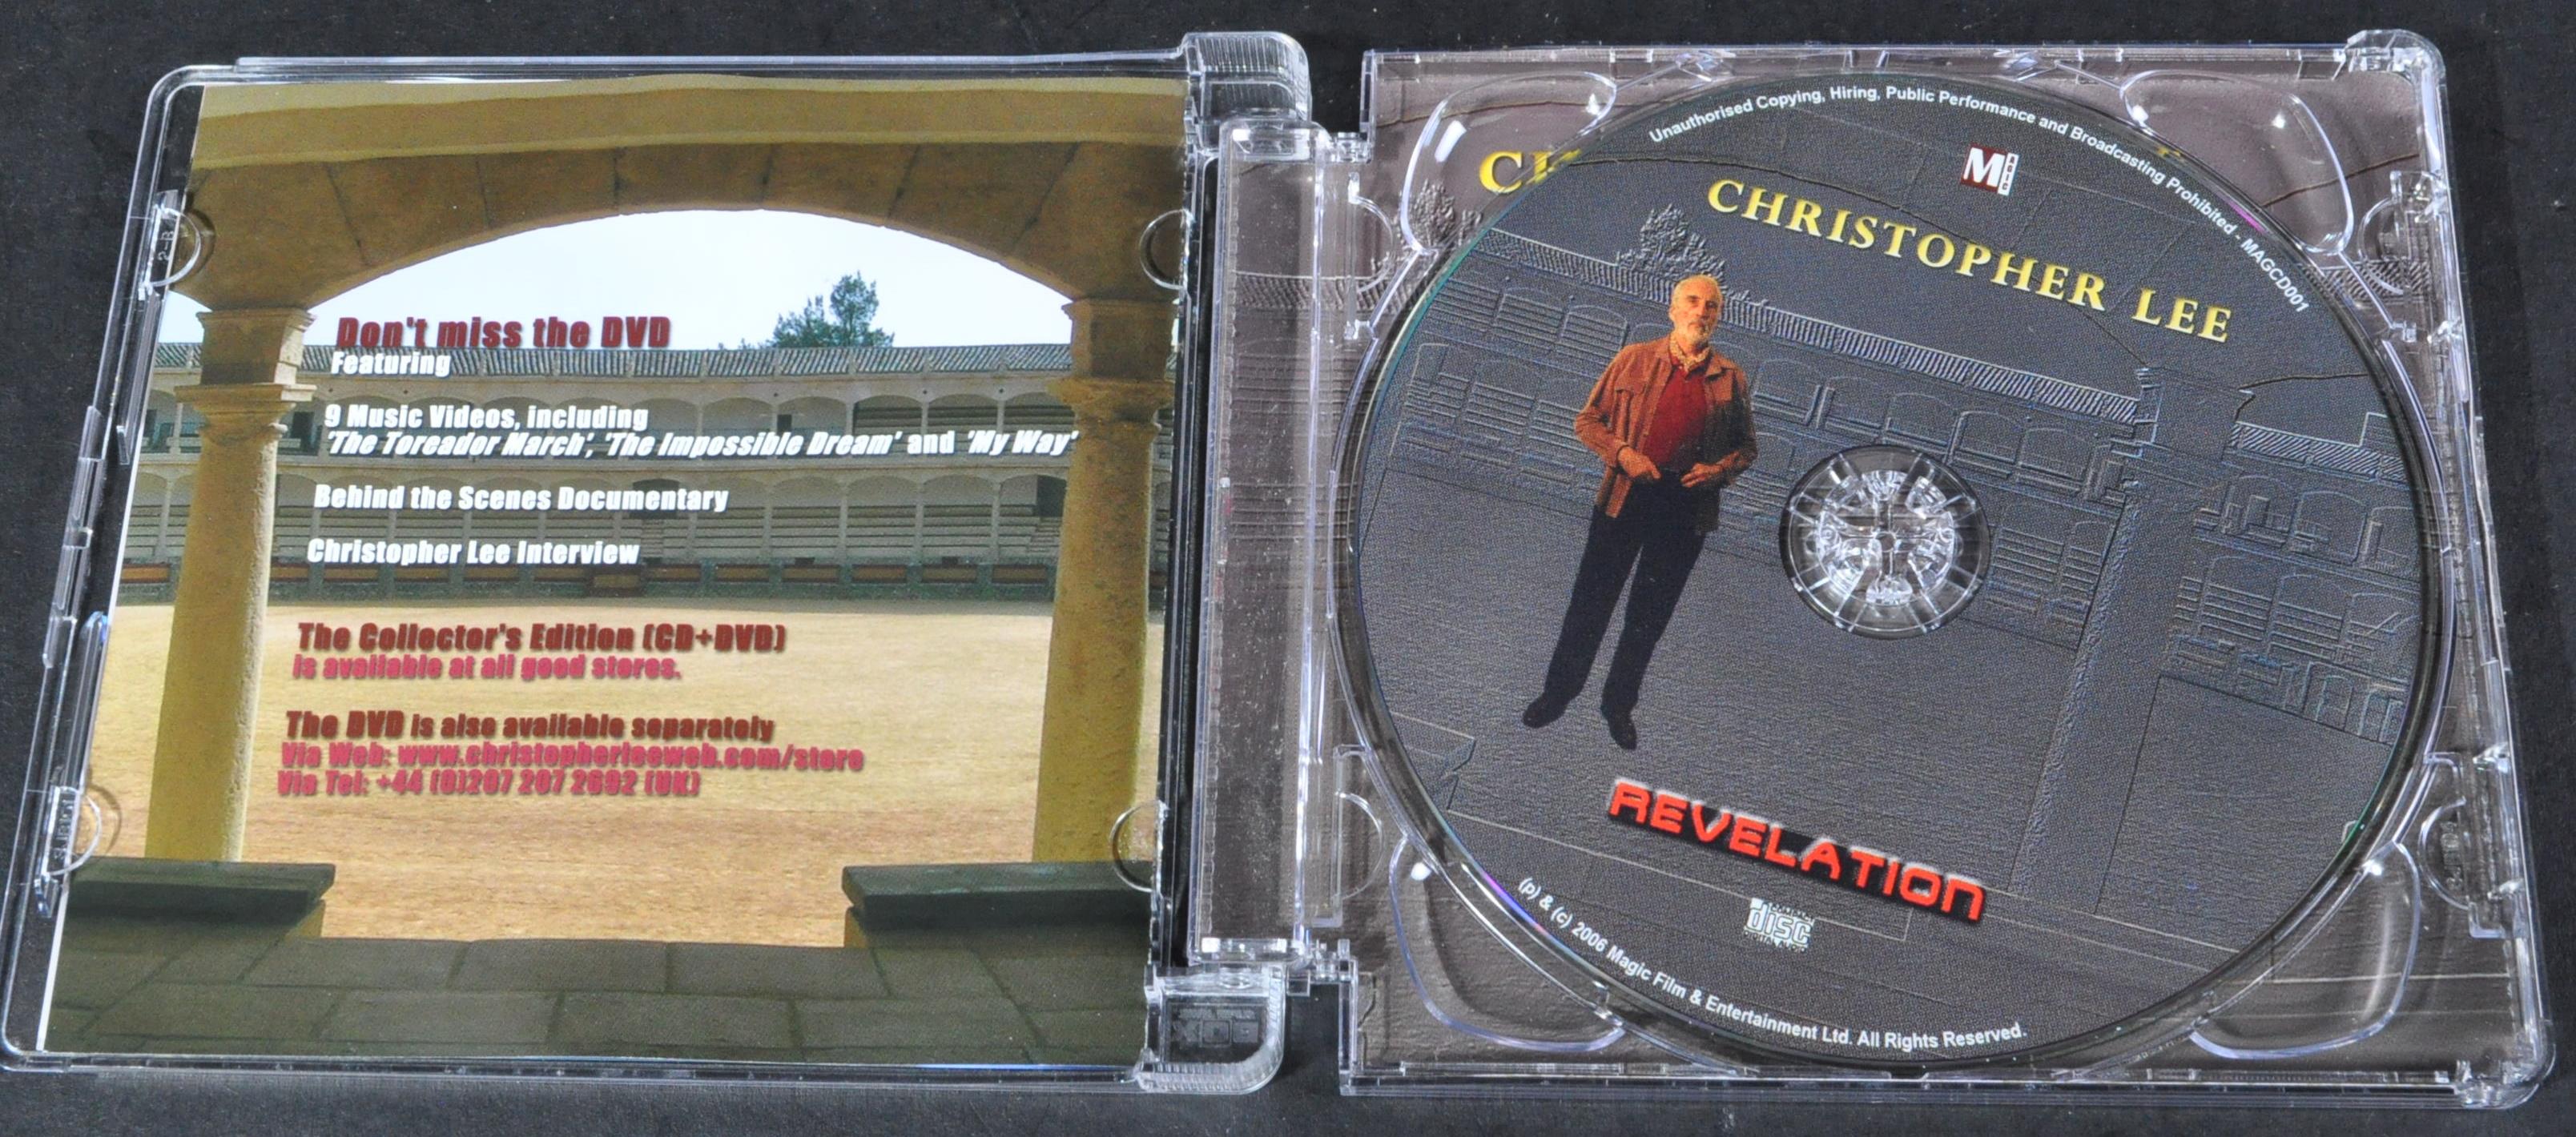 SIR CHRISTOPHER LEE - REVELATION - AUTOGRAPHED CD - Image 4 of 4